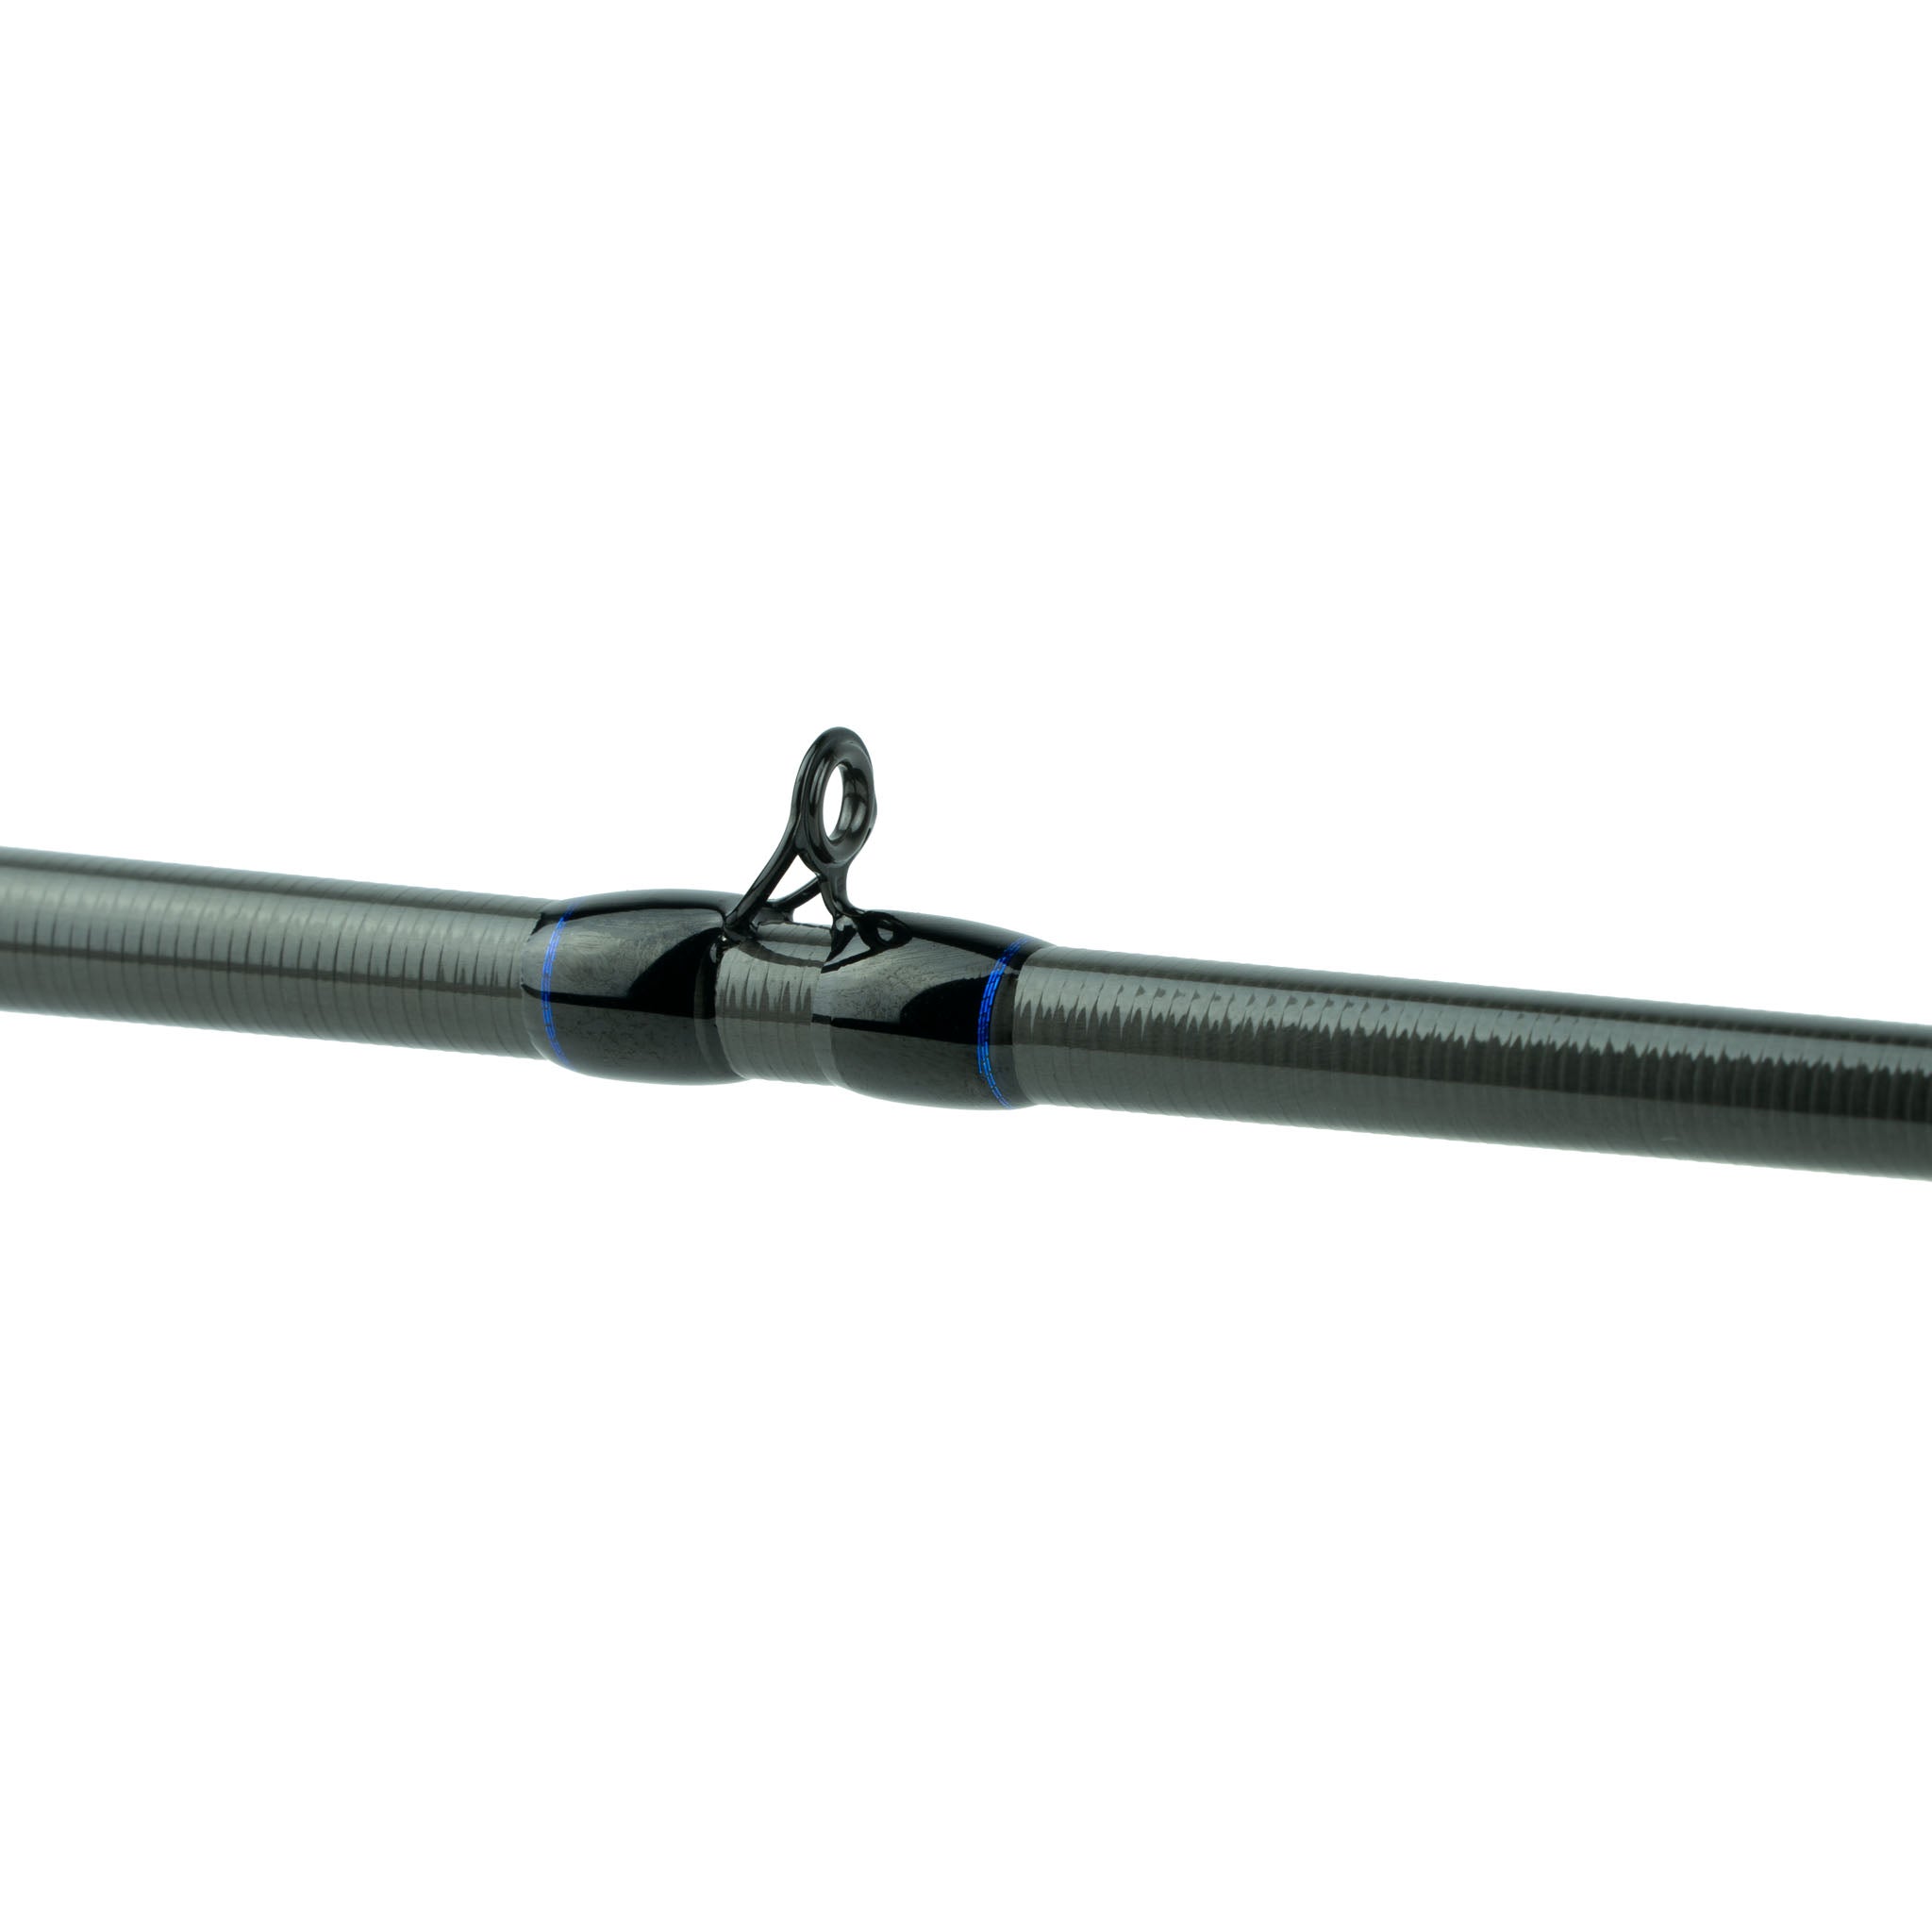 6th Sense Milliken Series Fishing Rods 7'2 Medium Heavy/ Mod Fast